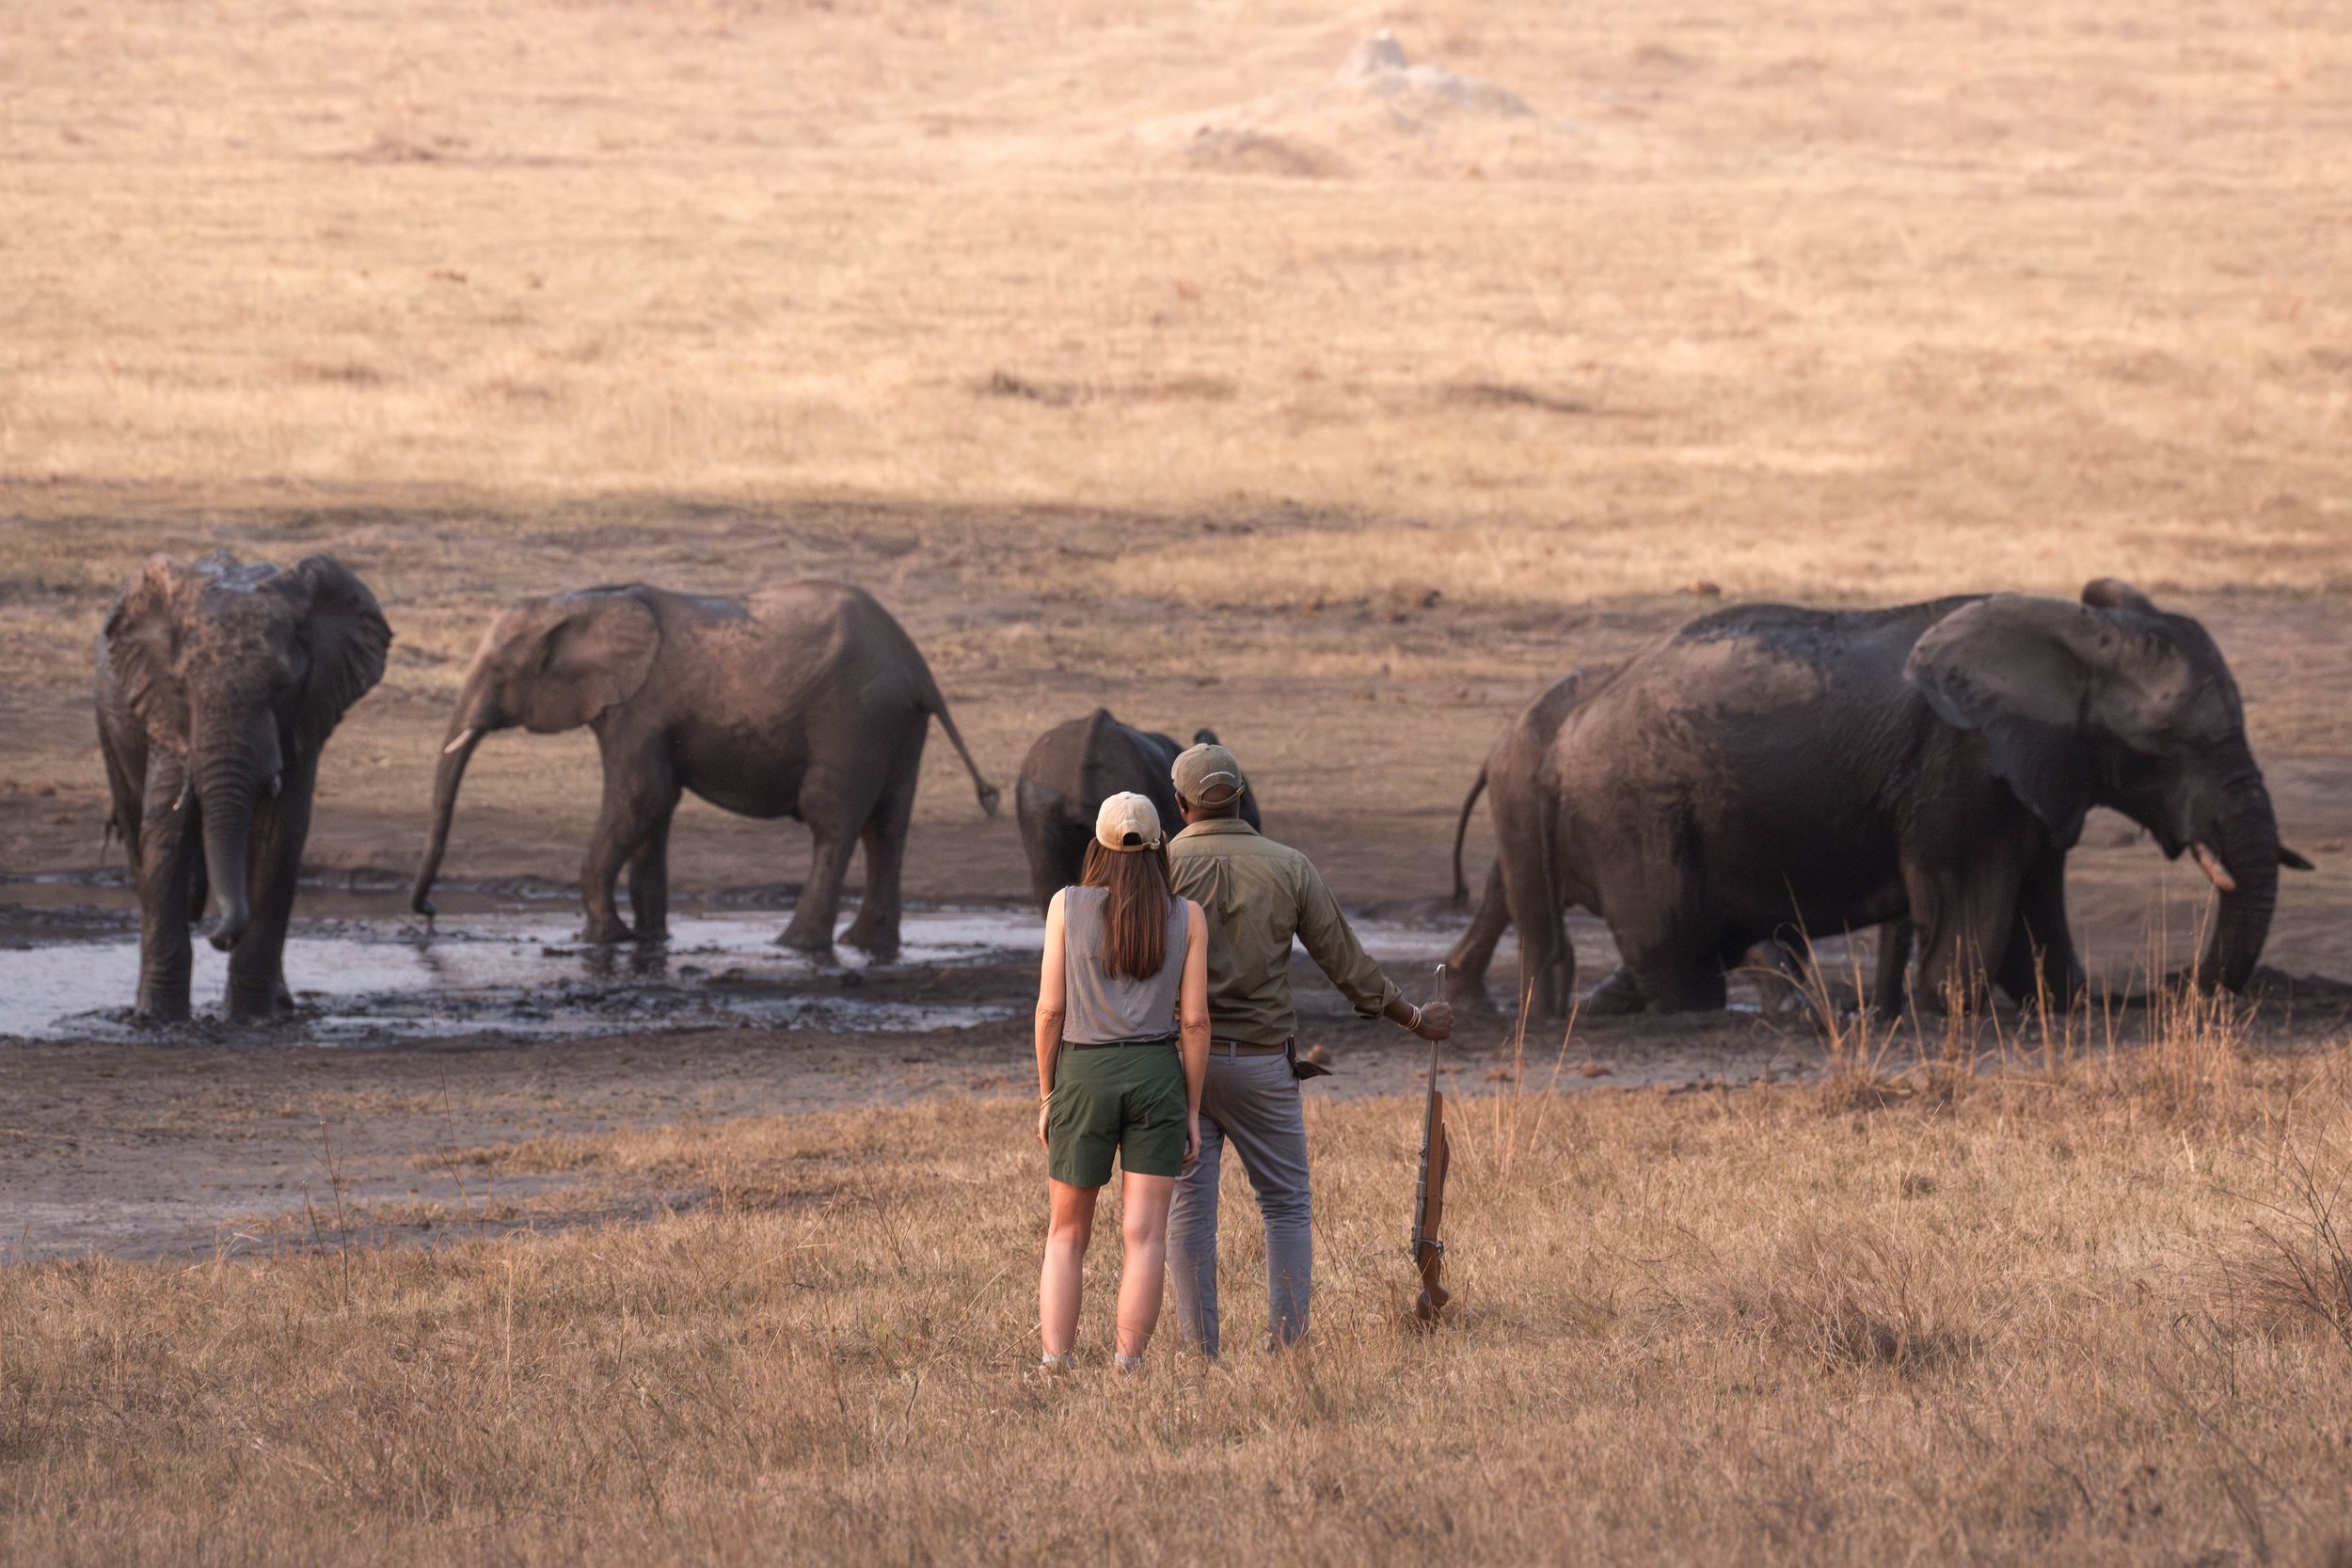 A couple walking towards the elephants.